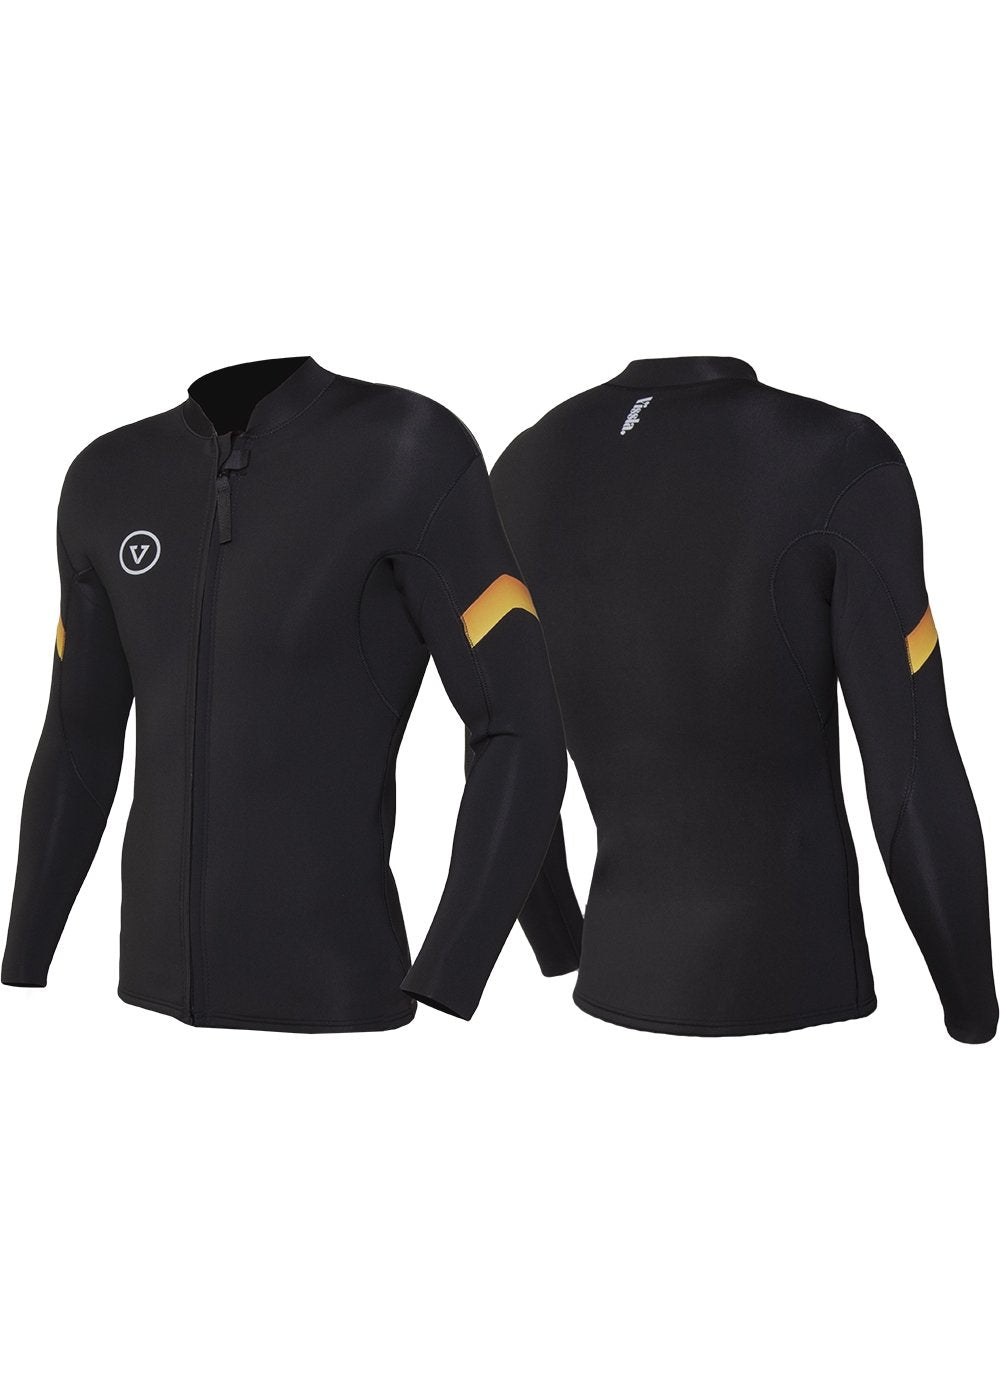 Vissla Men's Black Raditude 2MM Front Zip Wetsuit Jacket. Front and Back View